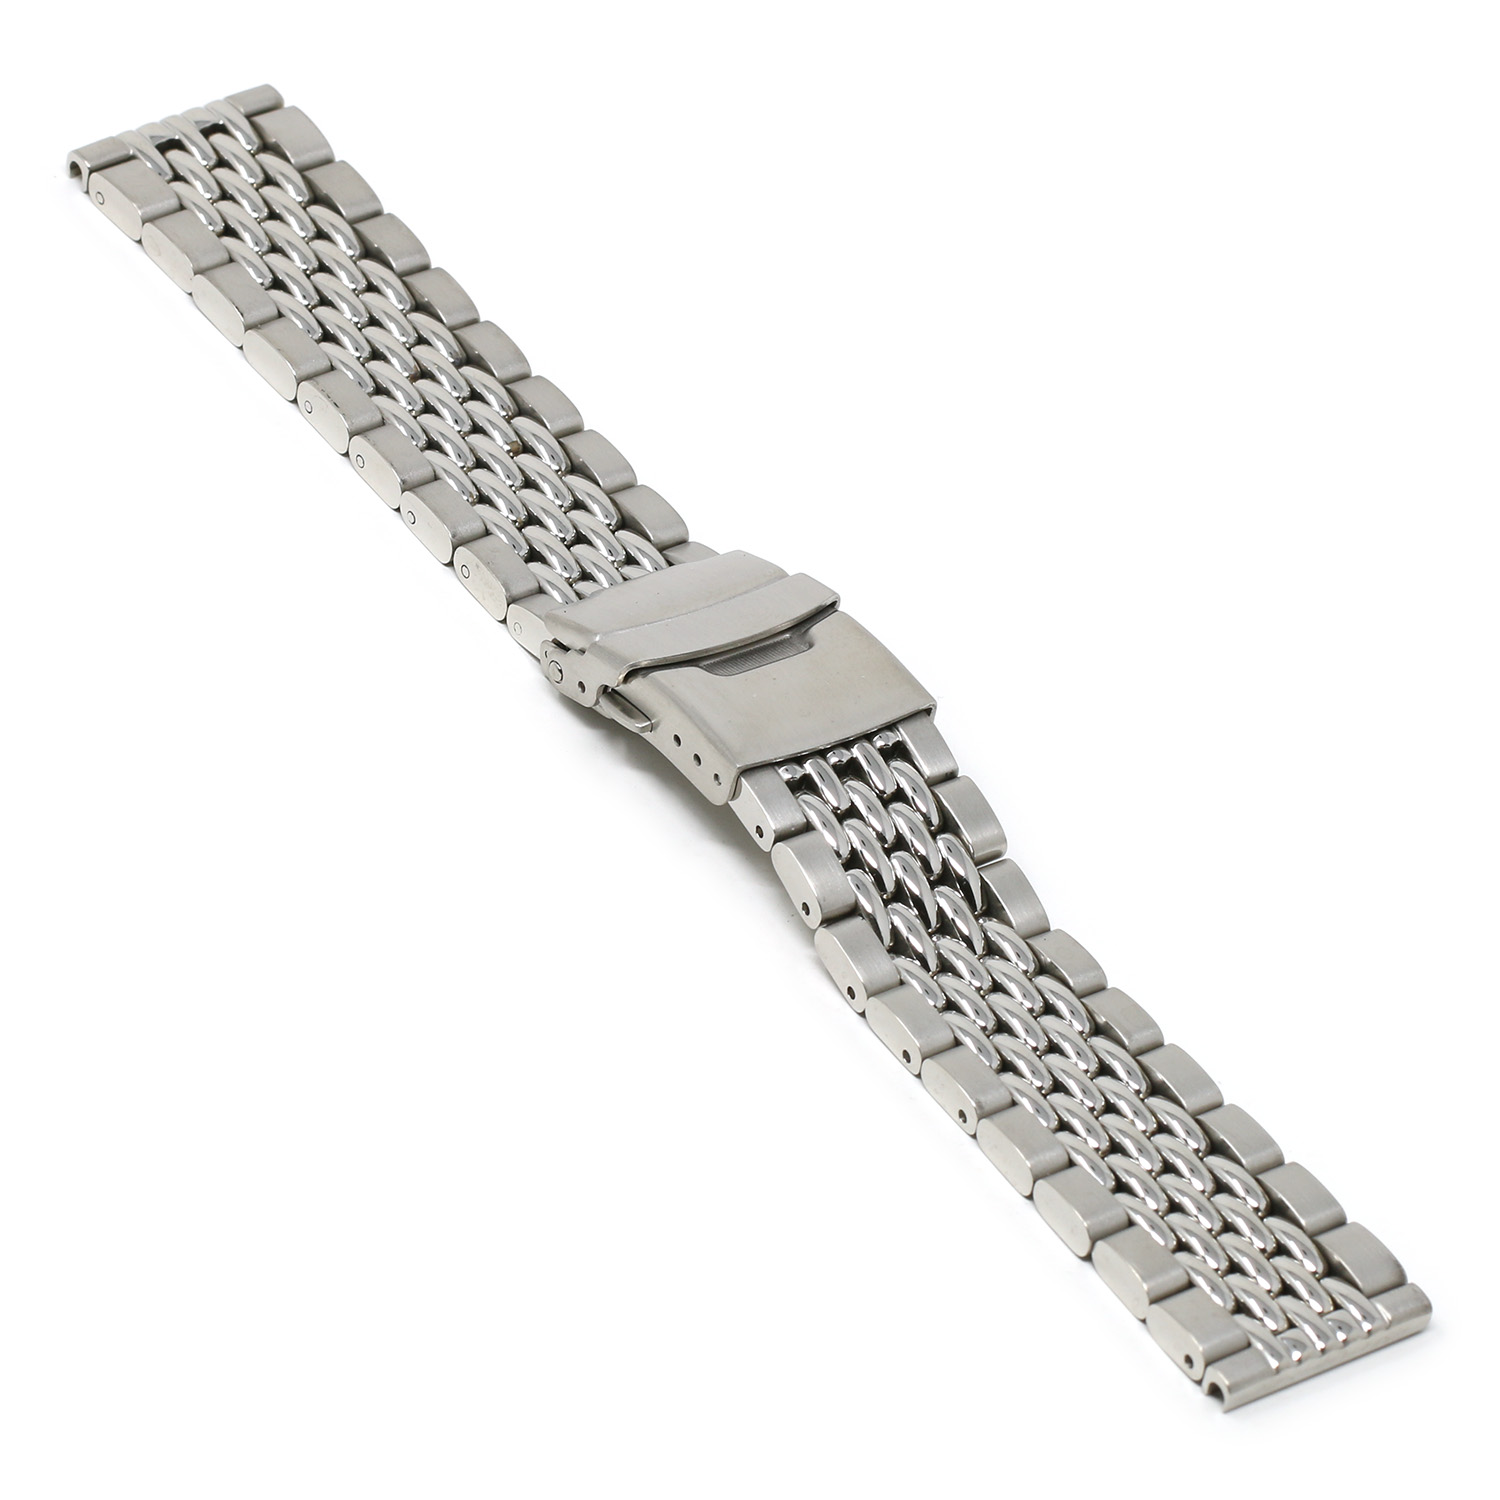 Beads of Rice Bracelet For Apple Watch | StrapsCo